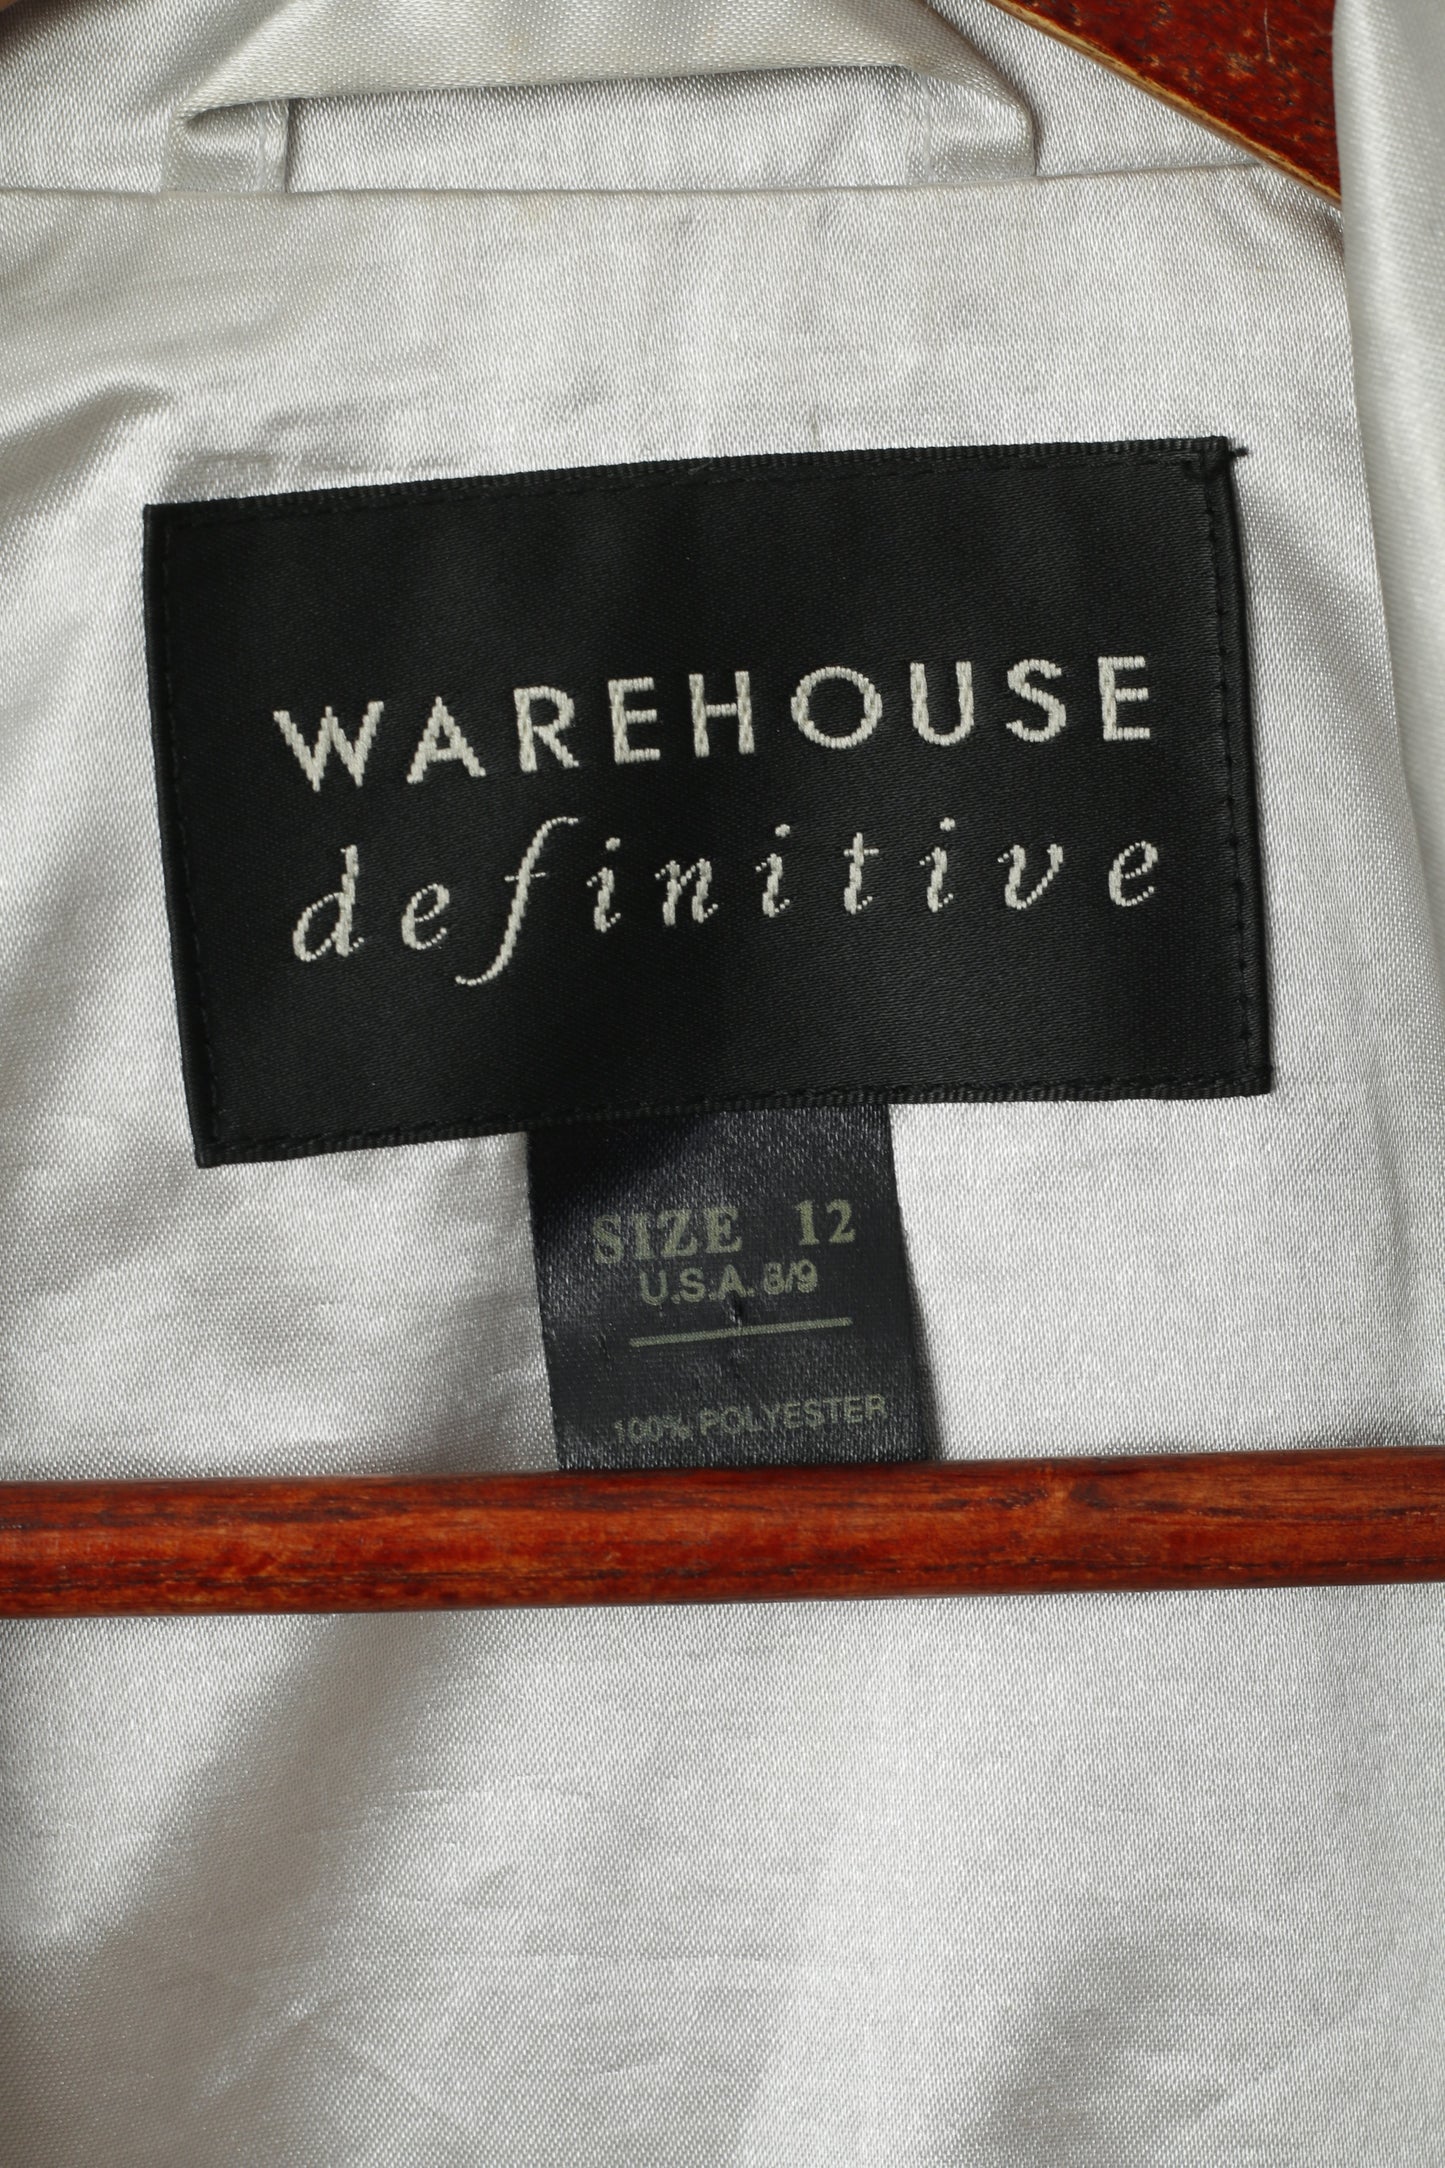 Warehouse Definitive Giacca da donna 12 M Tasche argento Trench casual con cintura